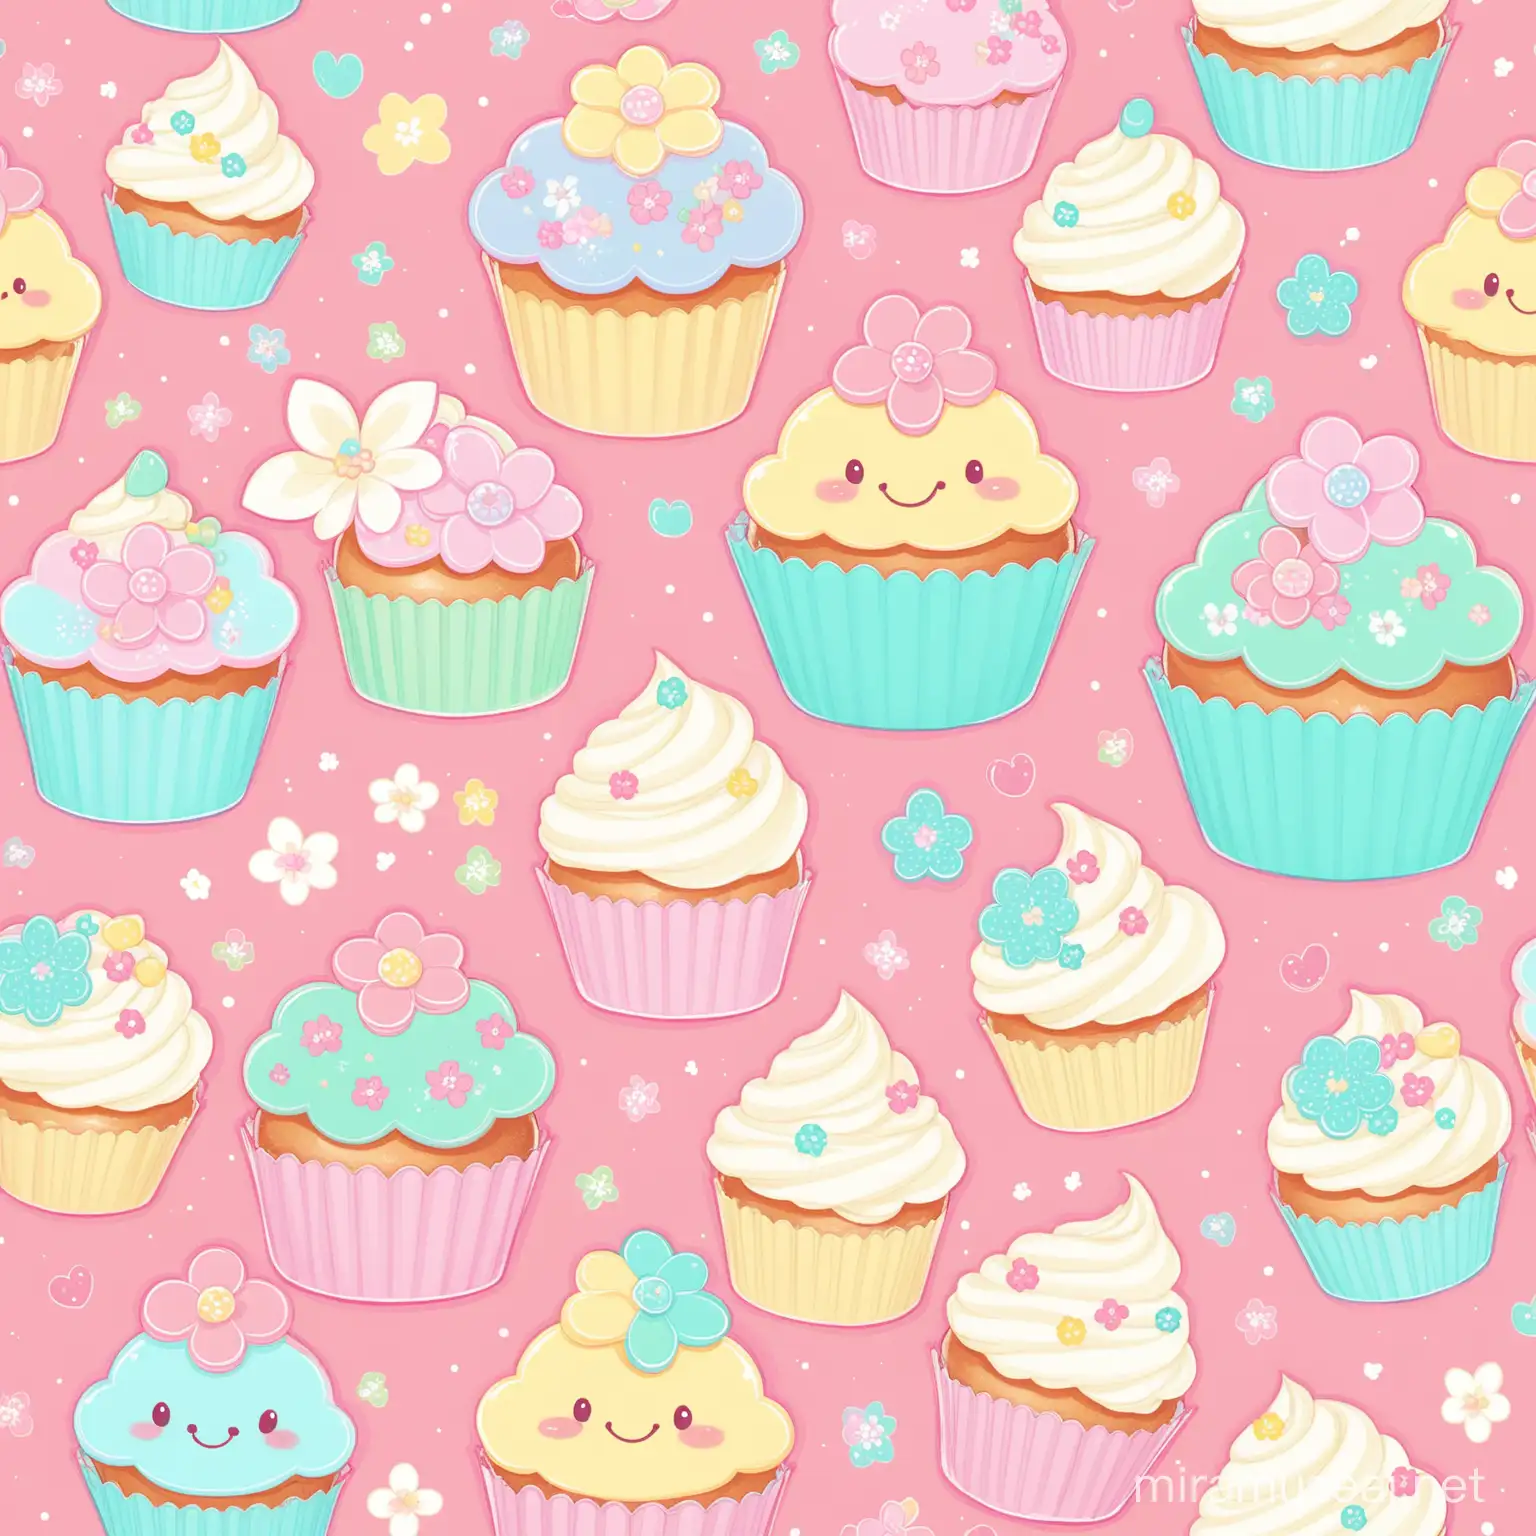 Smile Cupcake cute floral pastel